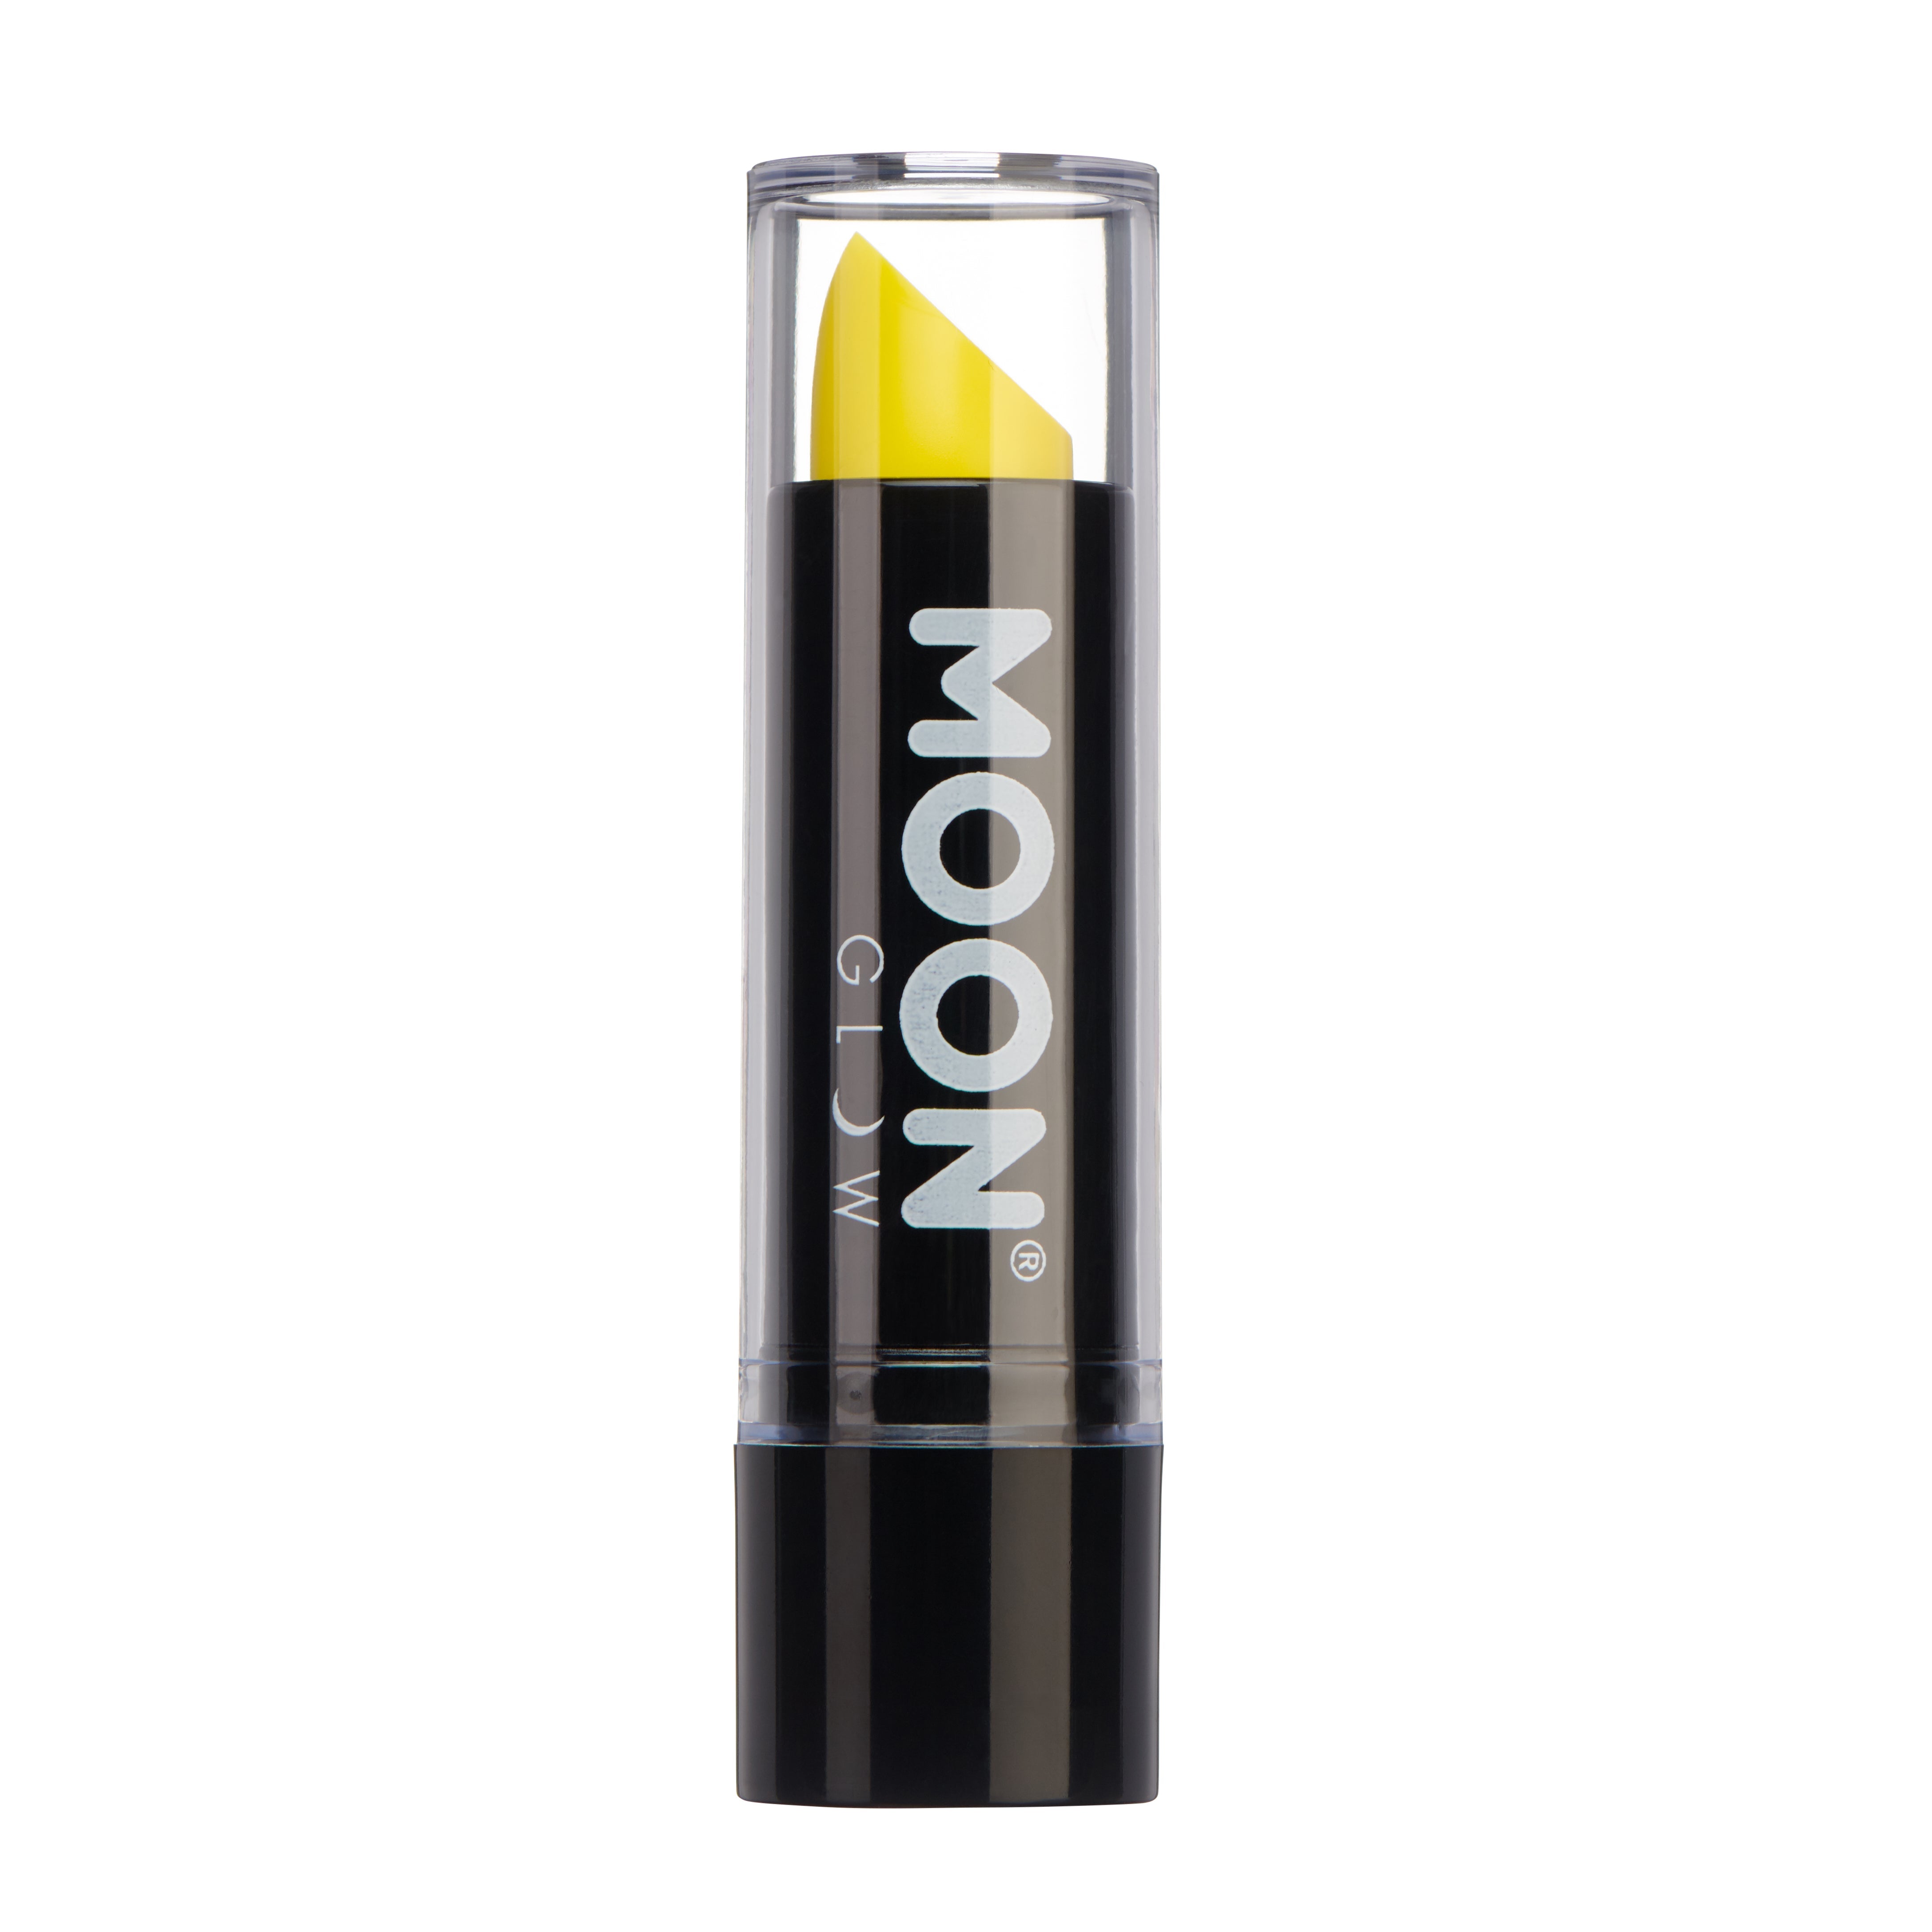 Intense Yellow - Neon UV Glow Blacklight Lipstick, 5g. Cosmetically certified, FDA & Health Canada compliant and cruelty free.